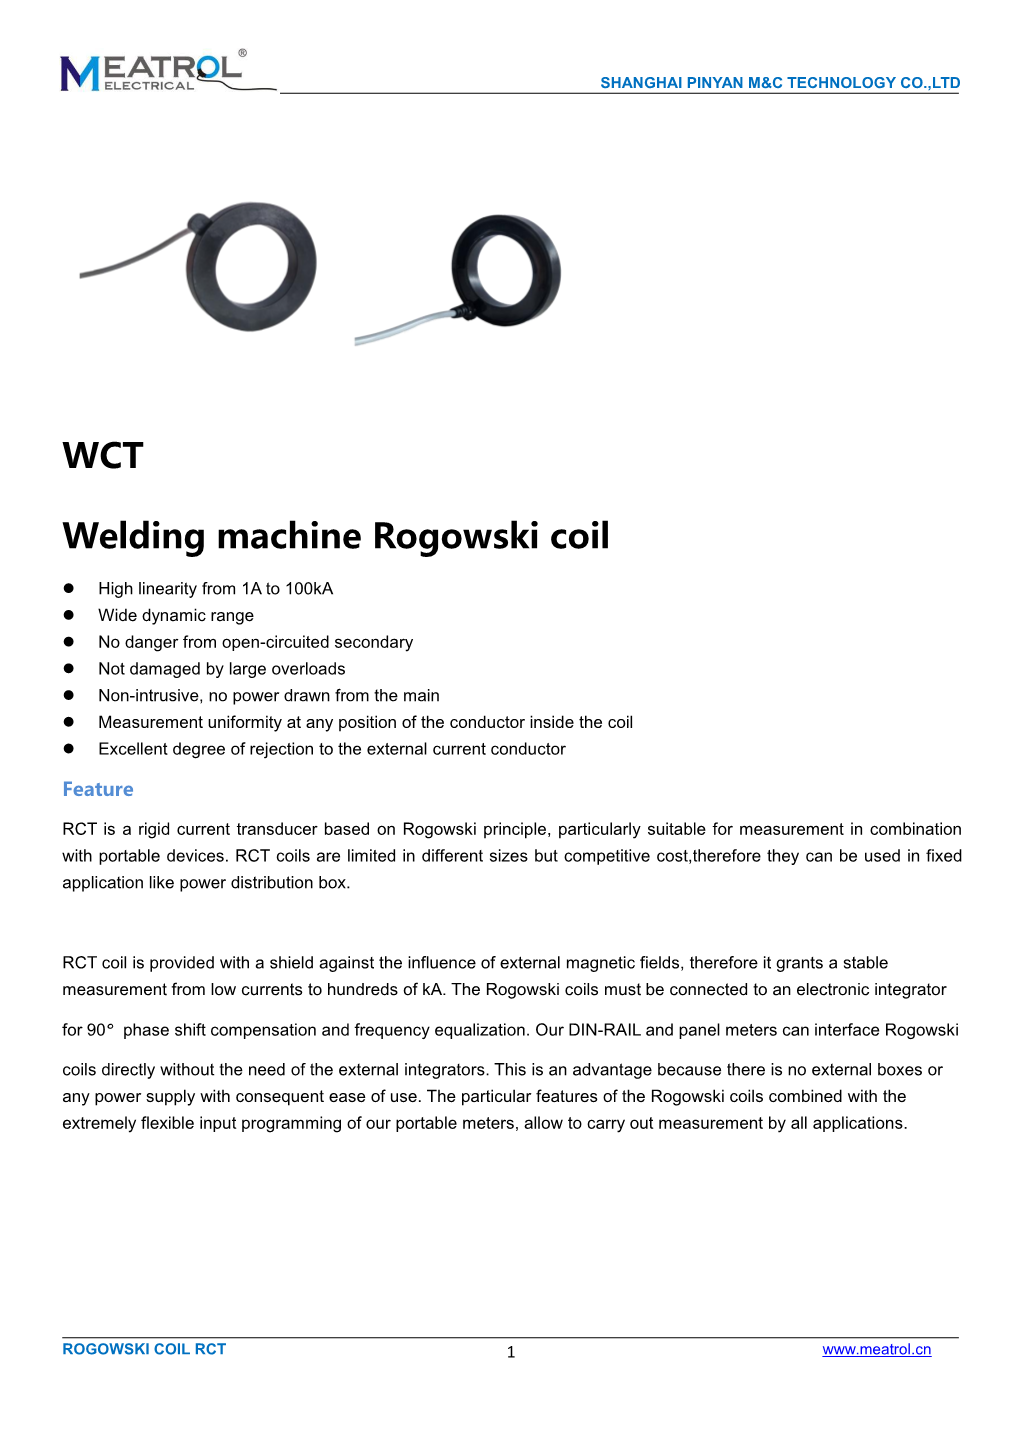 WCT Welding Machine Rogowski Coil